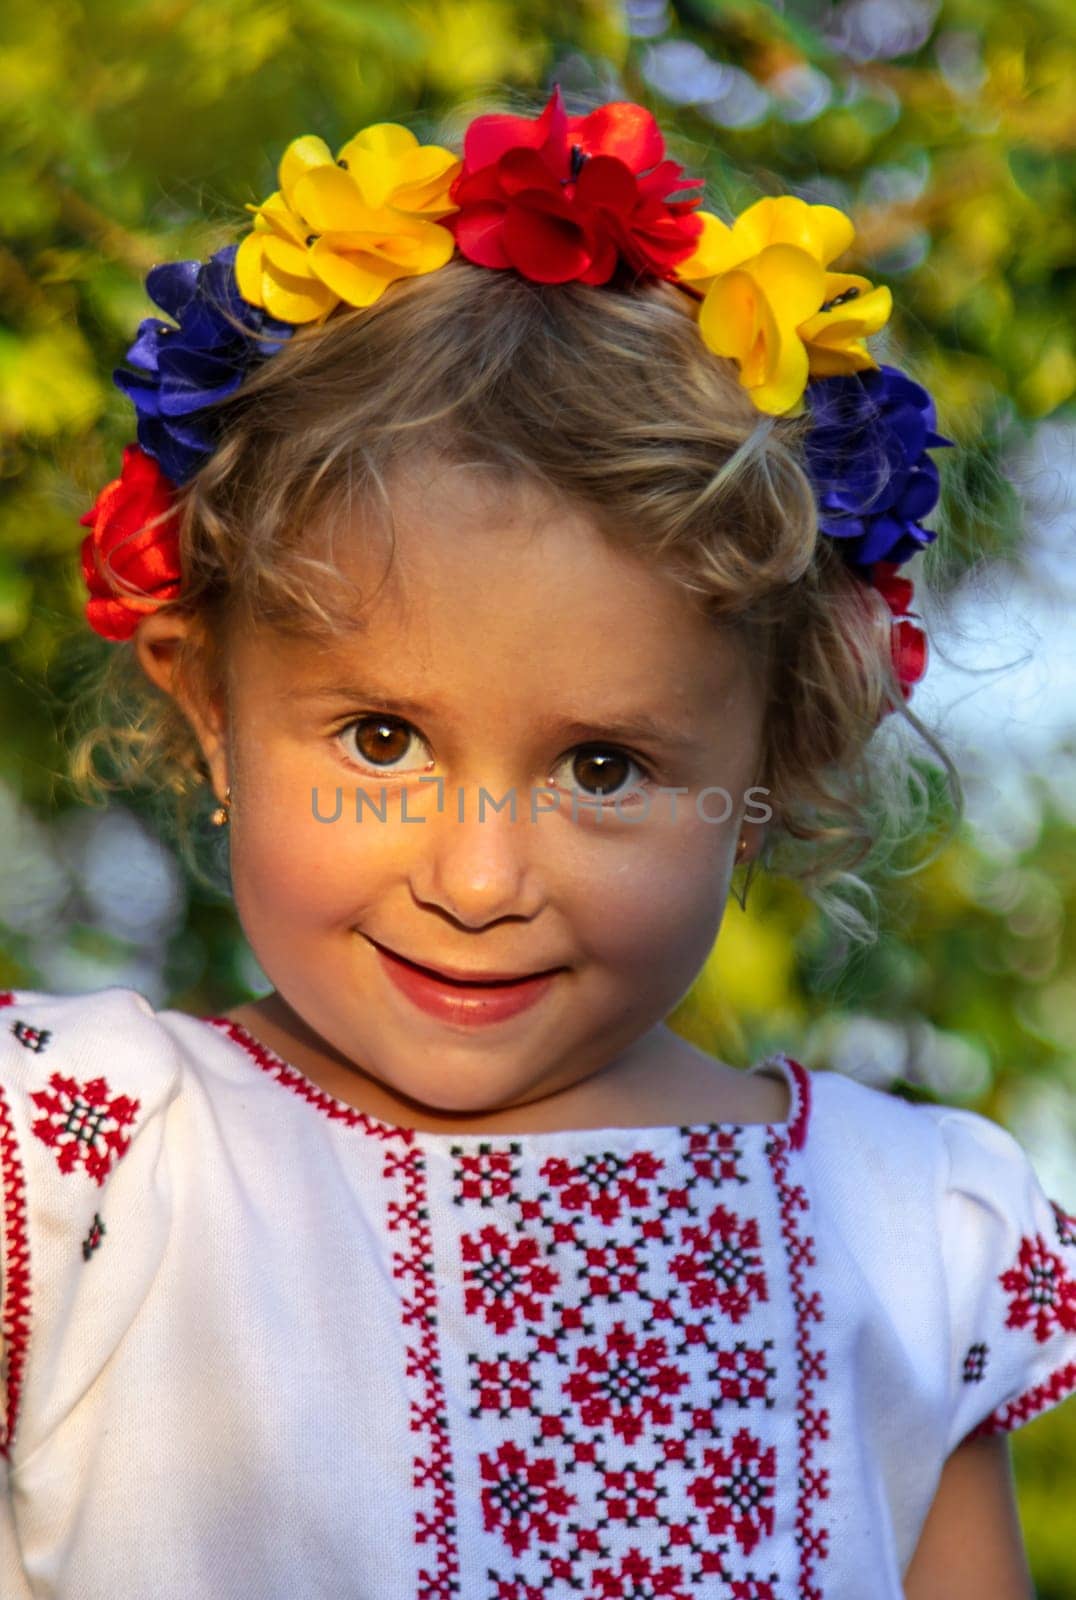 Child Ukrainian in a wreath. Selective focus. by yanadjana